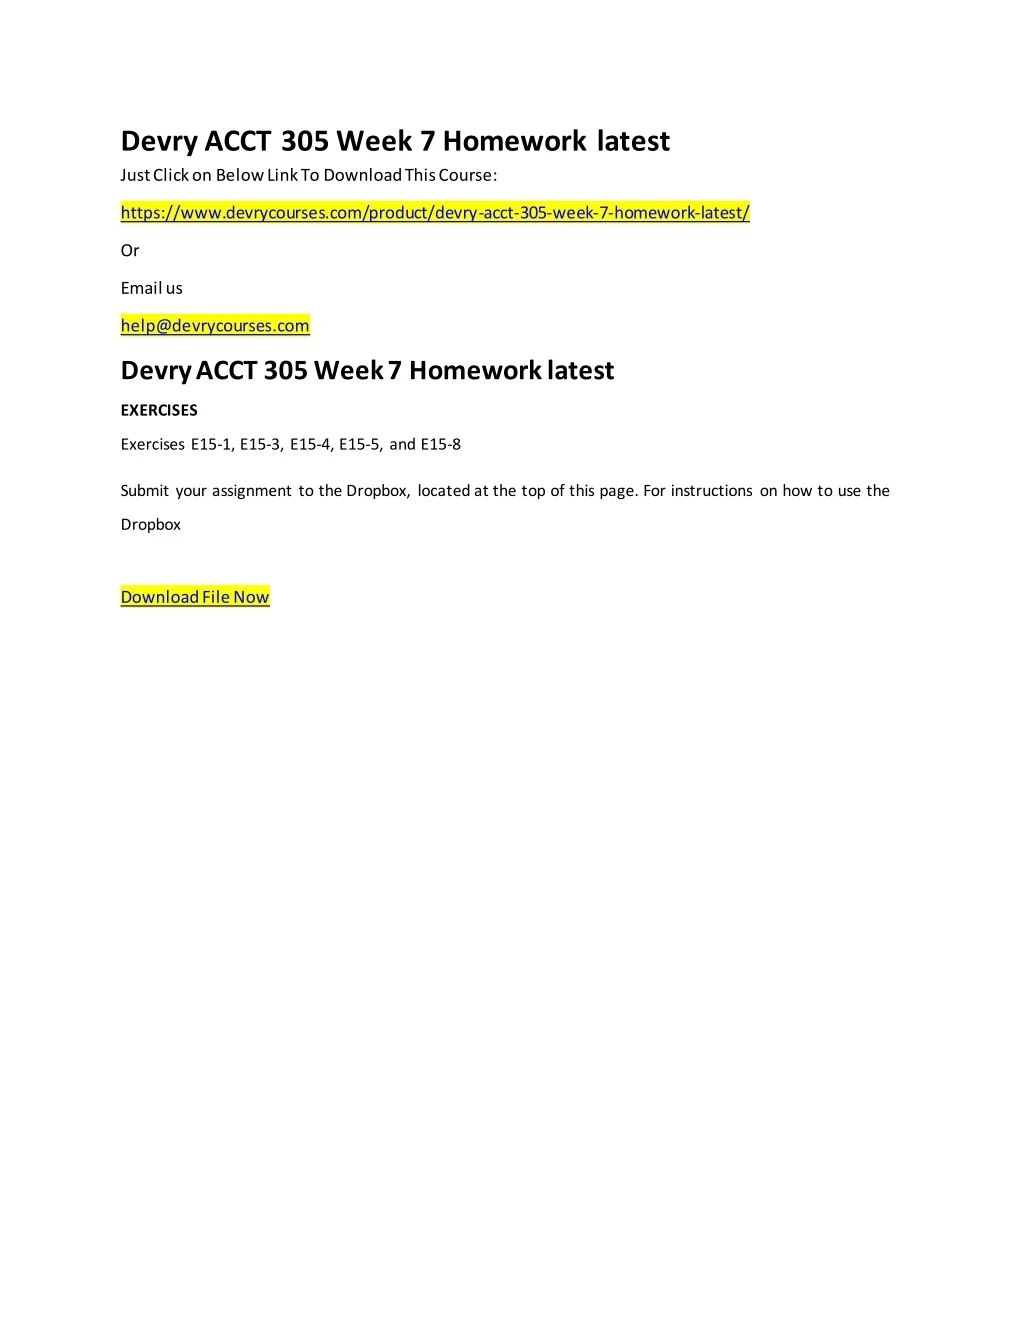 devry acct 305 week 7 homework latest just click